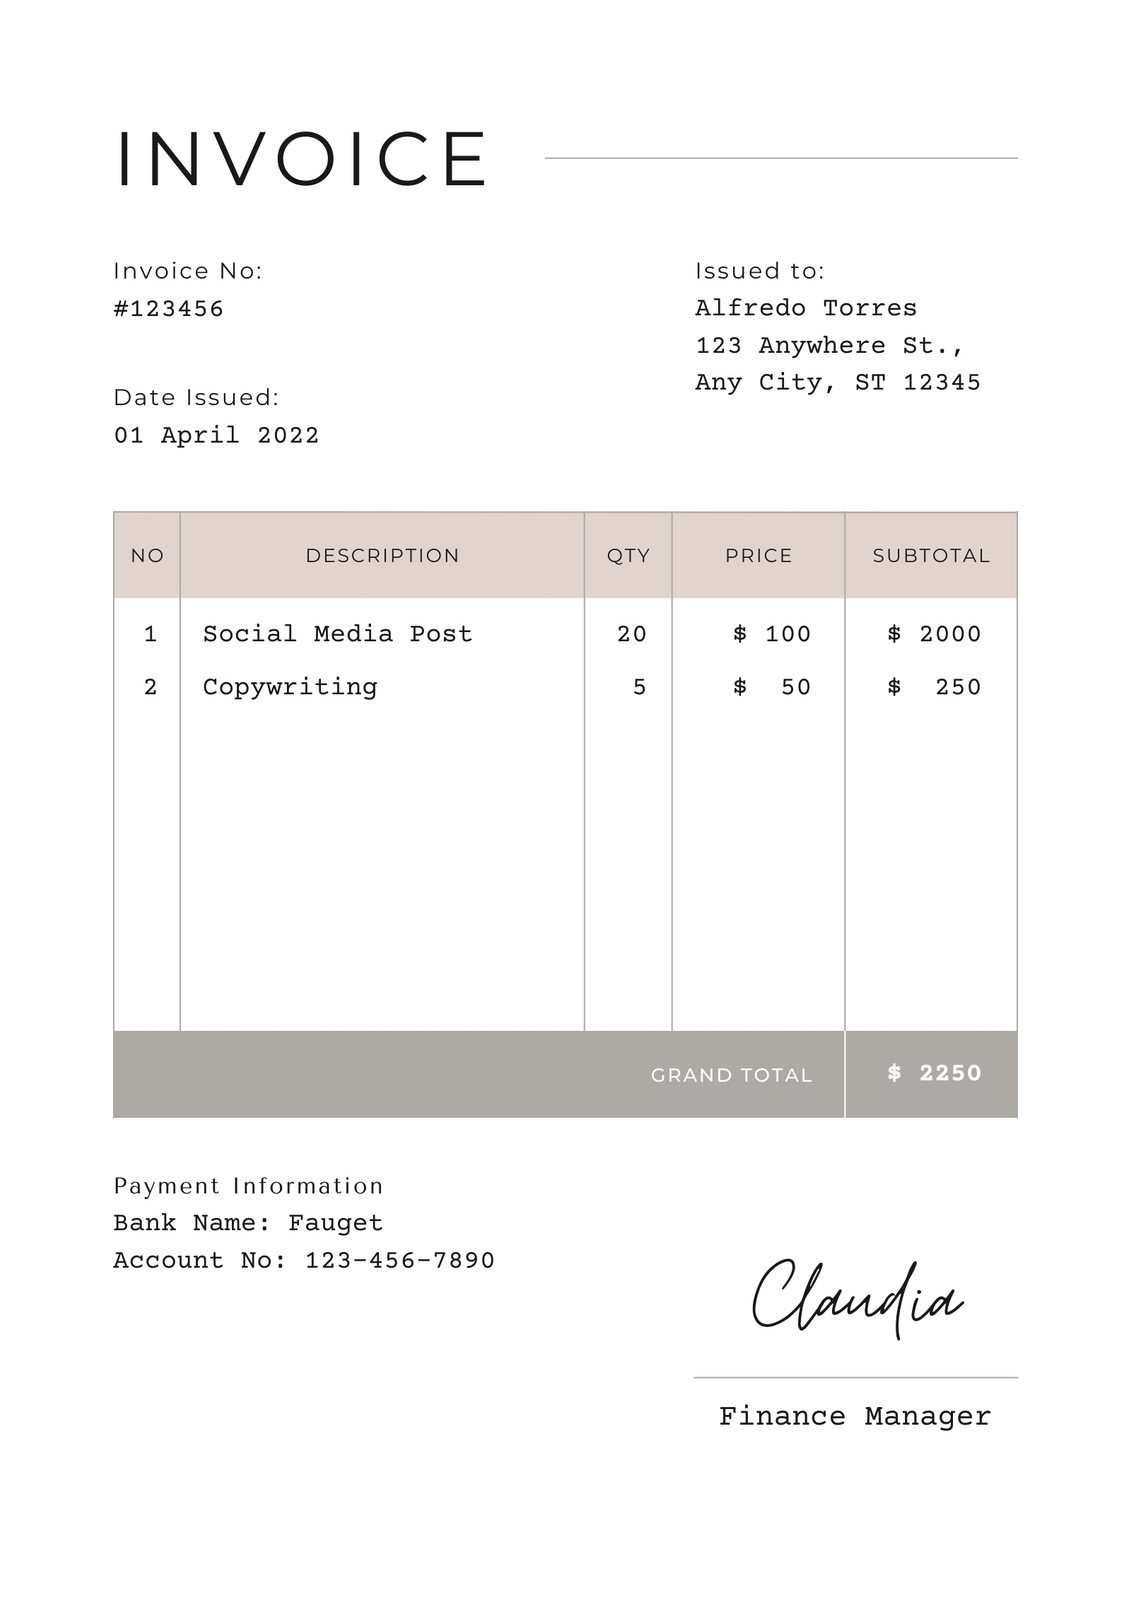 Free printable, customizable service invoice templates | Canva